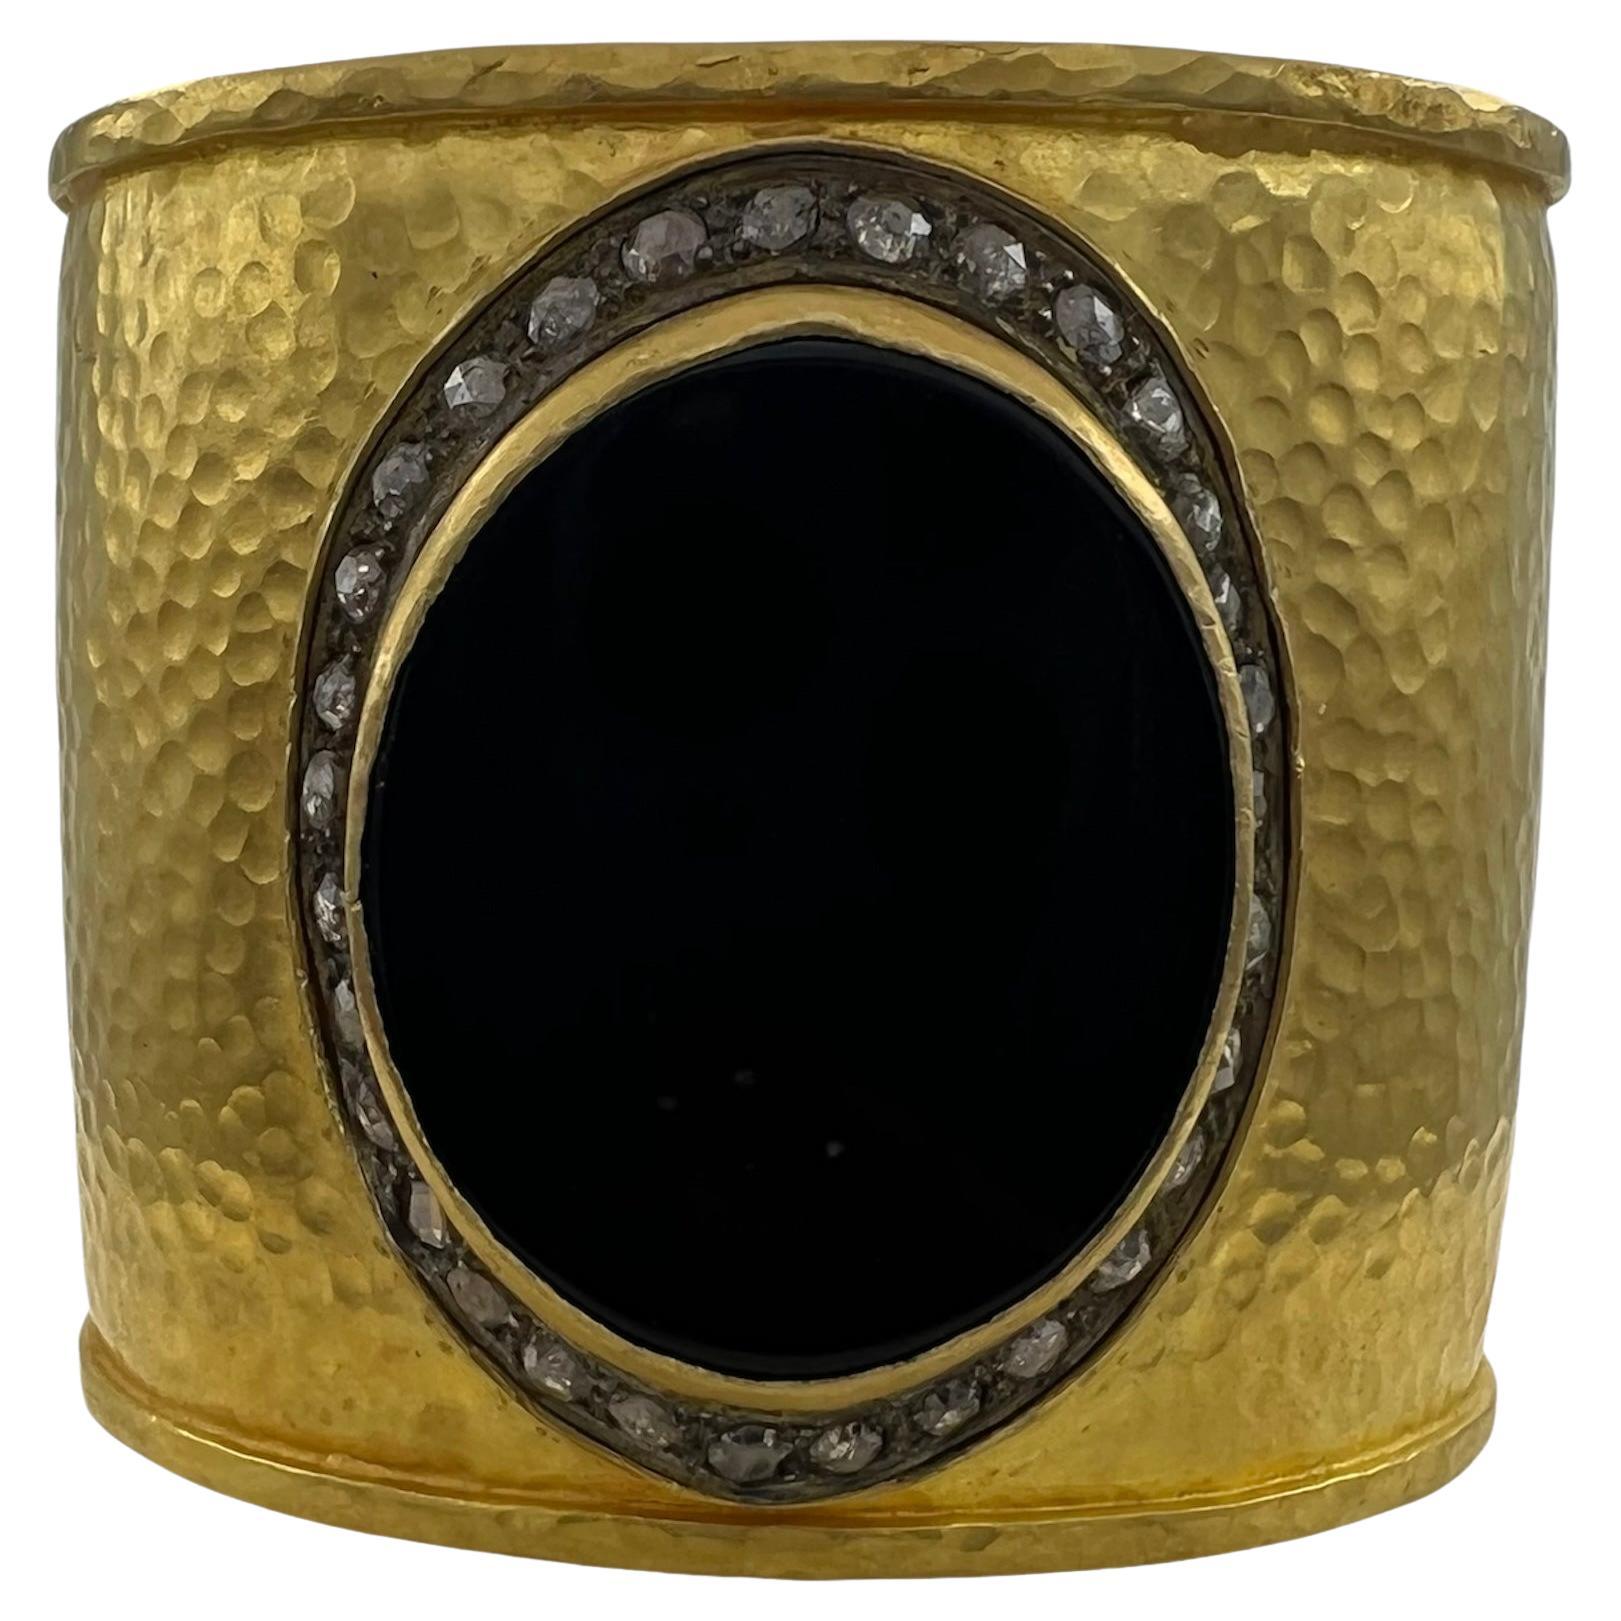 Vintage 18K Yellow Gold, Onyx & Dimond Cuff Bracelet 